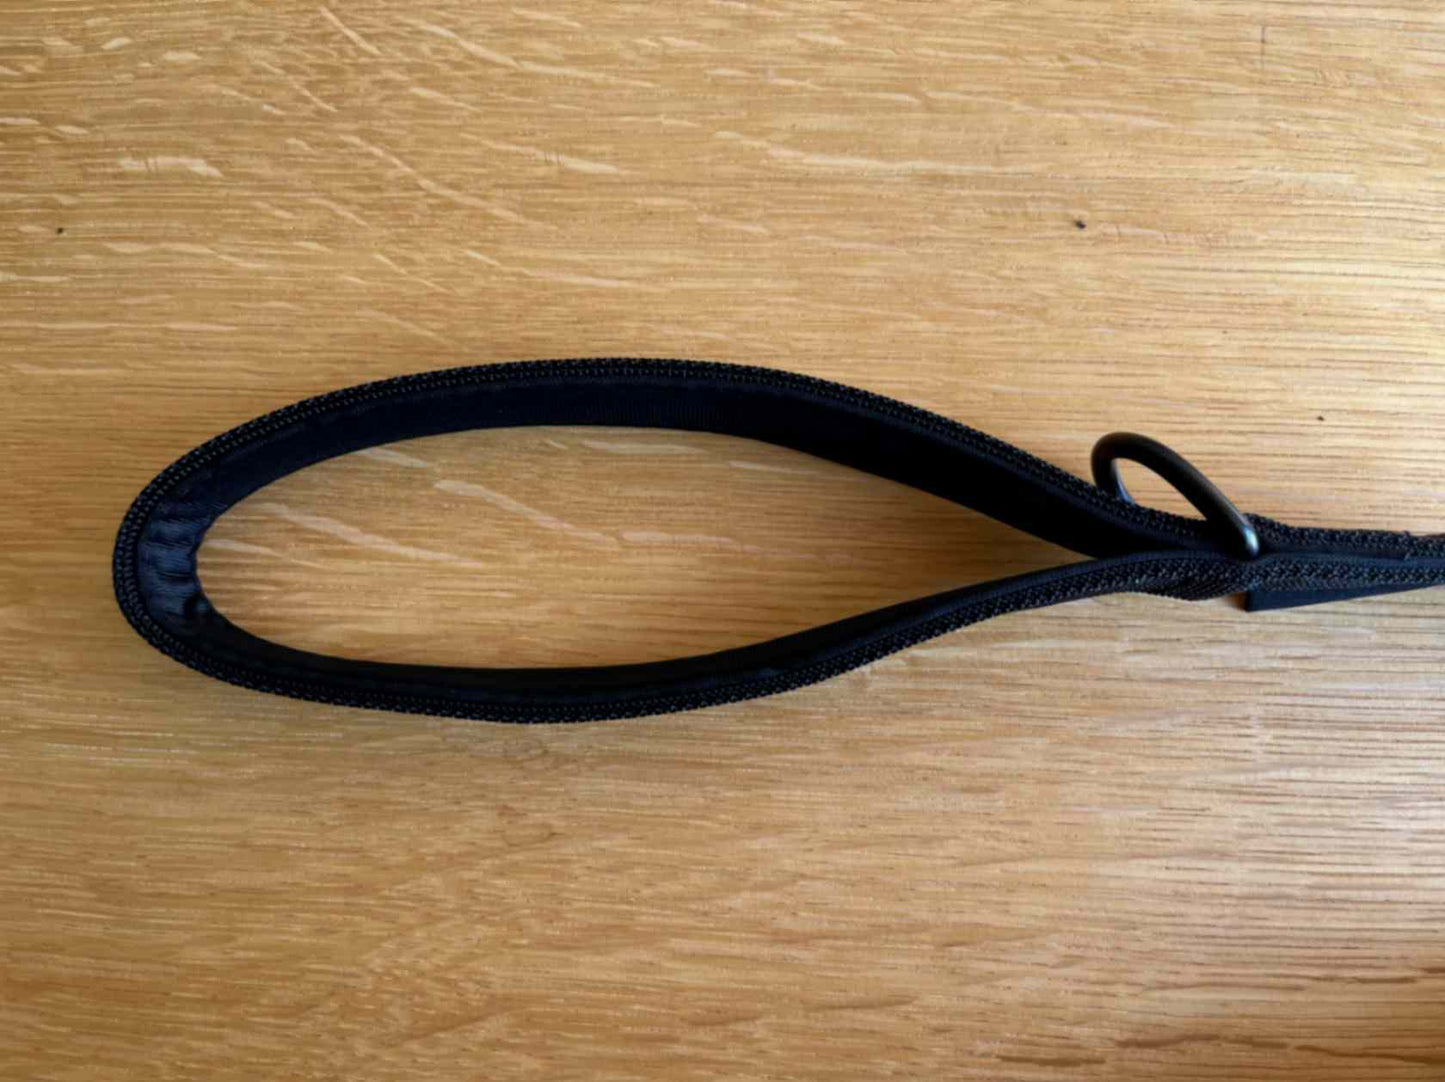 Handle of black leash